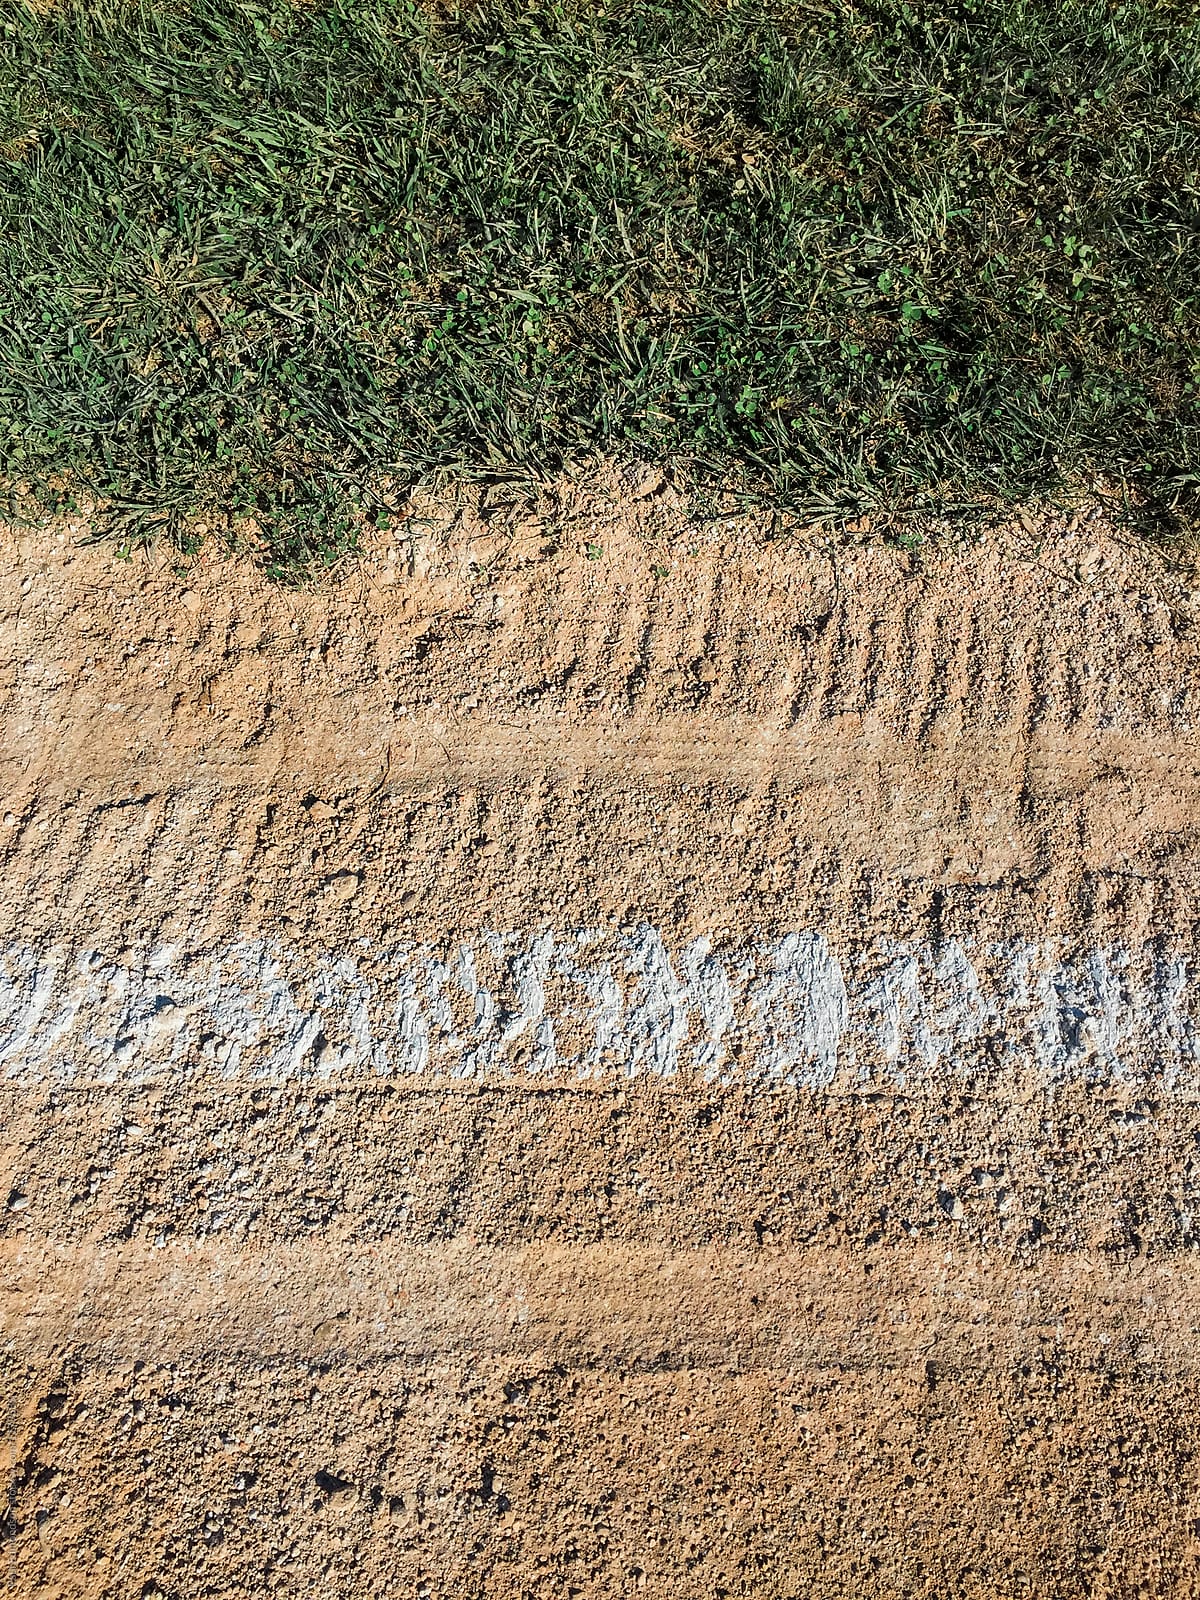 Close up of white boundary marks on baseball field